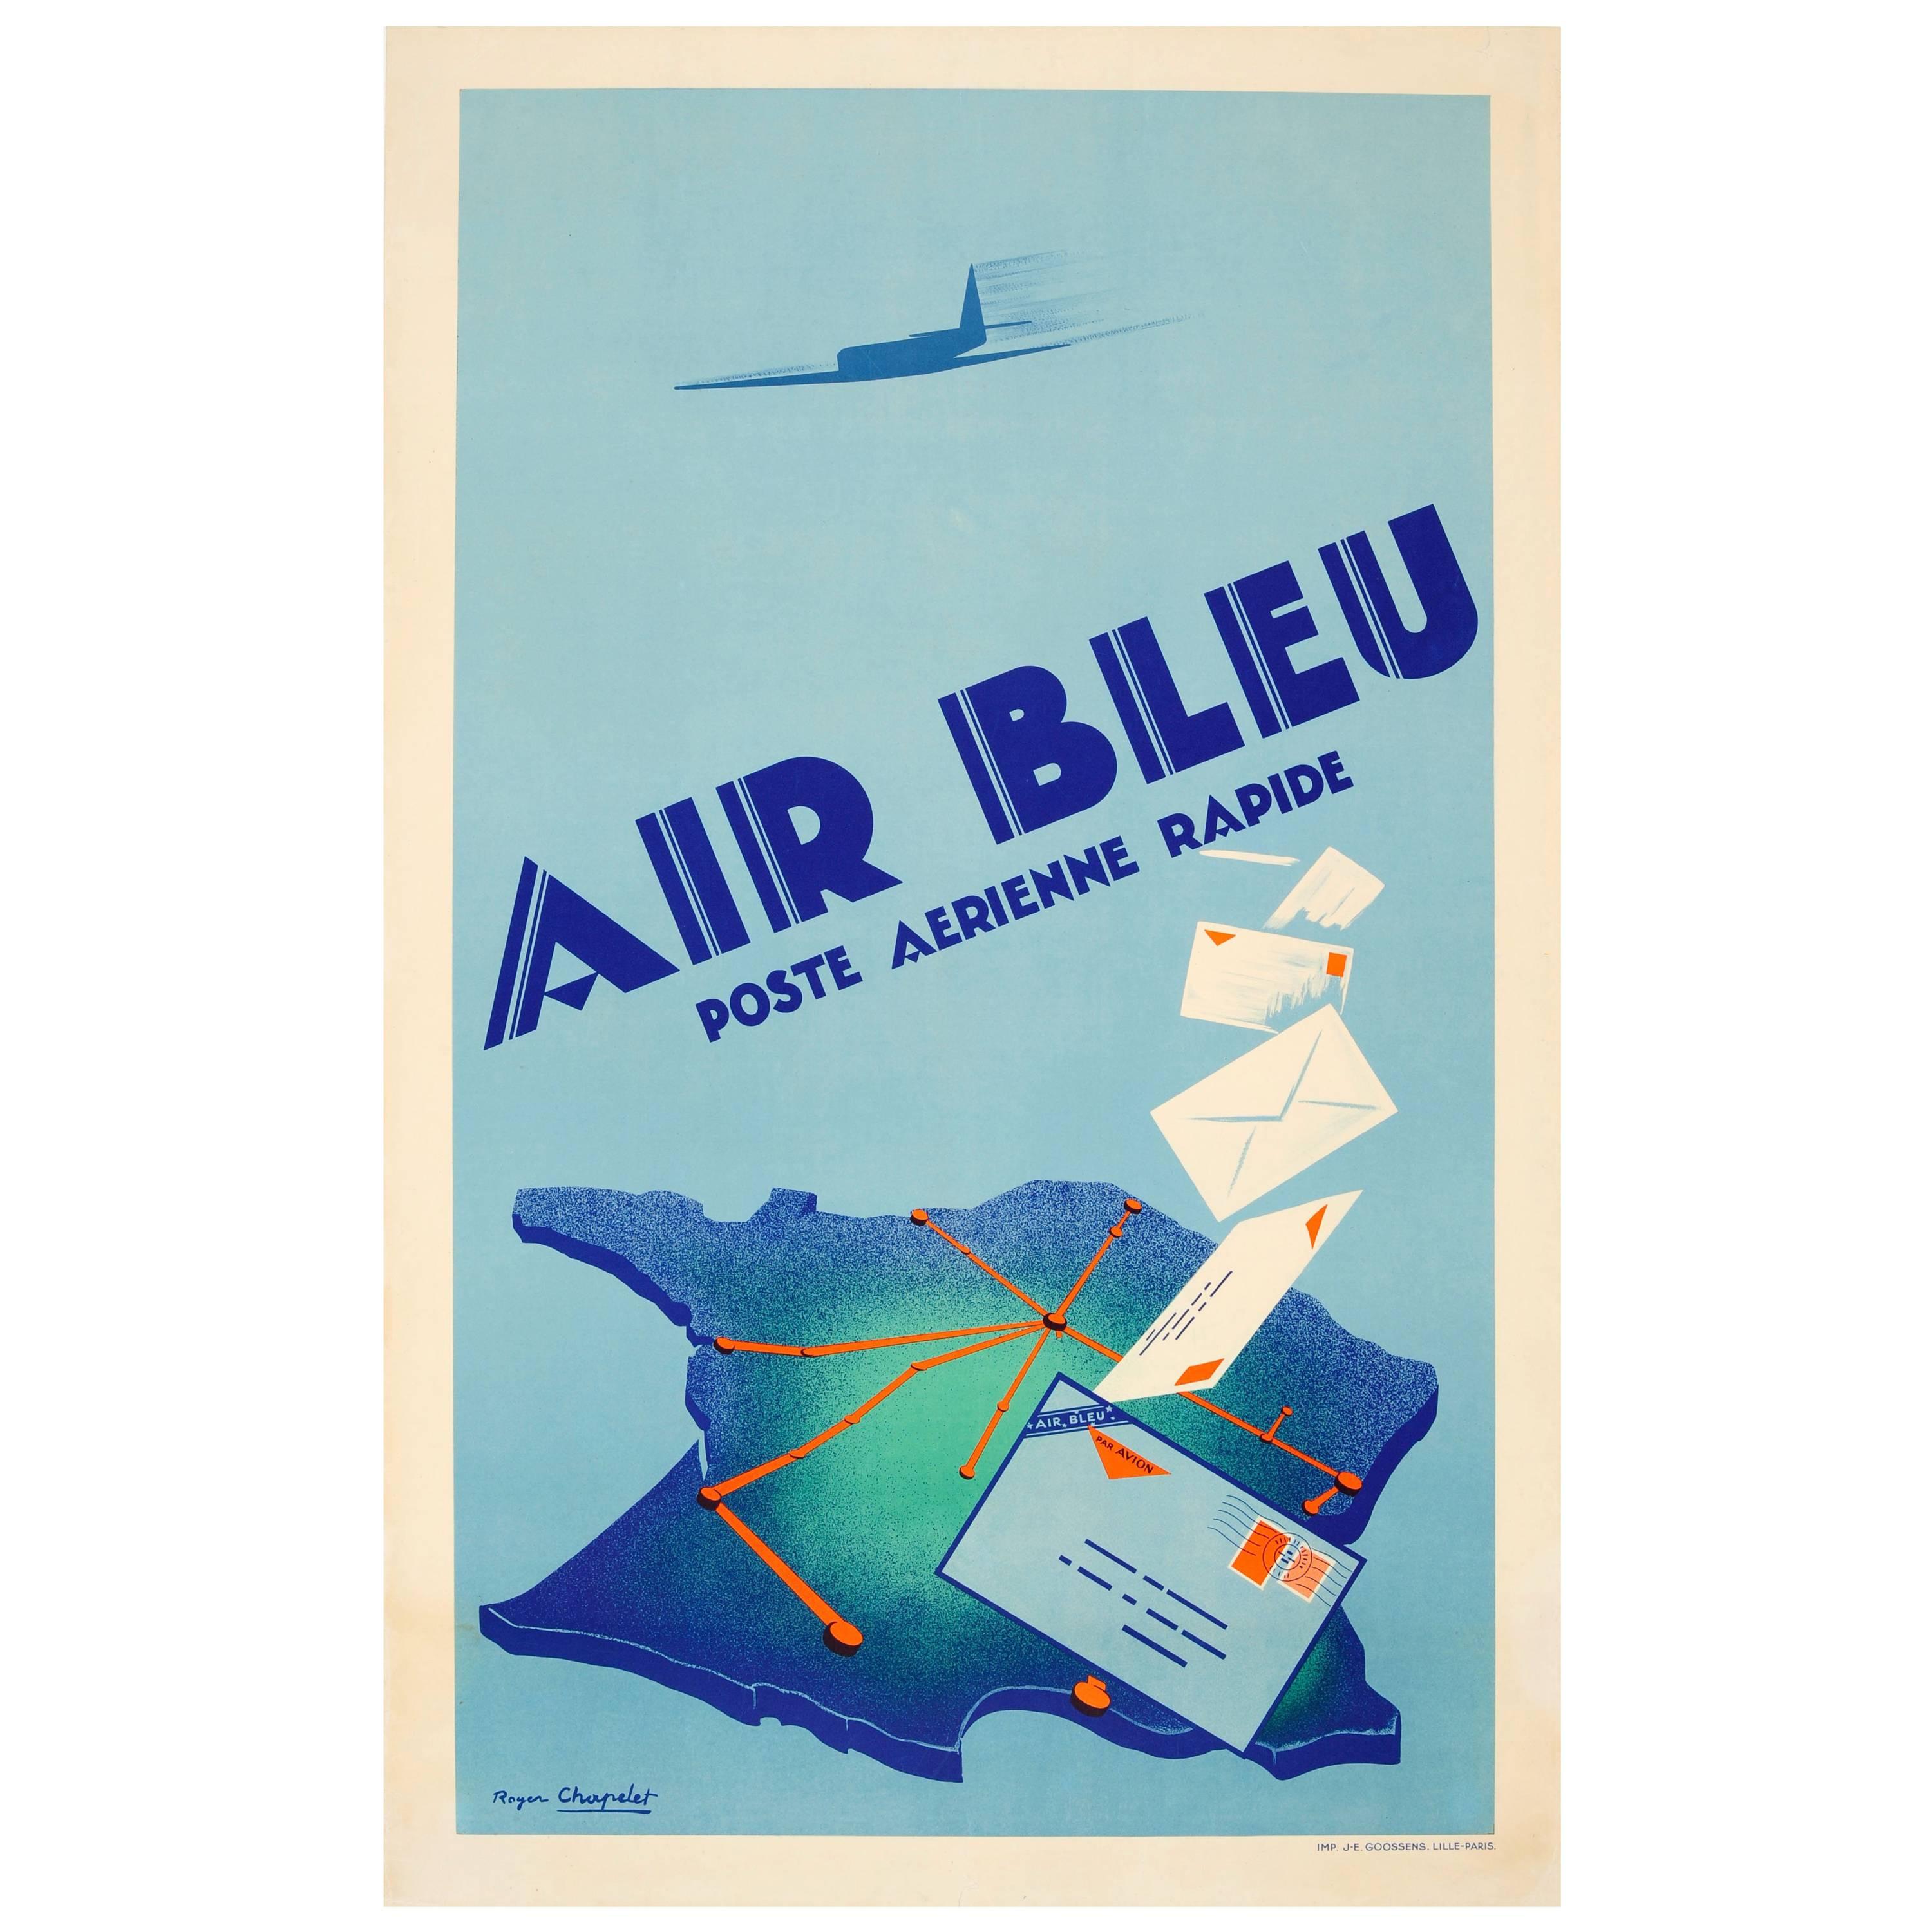 Original Vintage Art Deco Poster for Air Bleu Poste Aerienne Rapide Air Mail